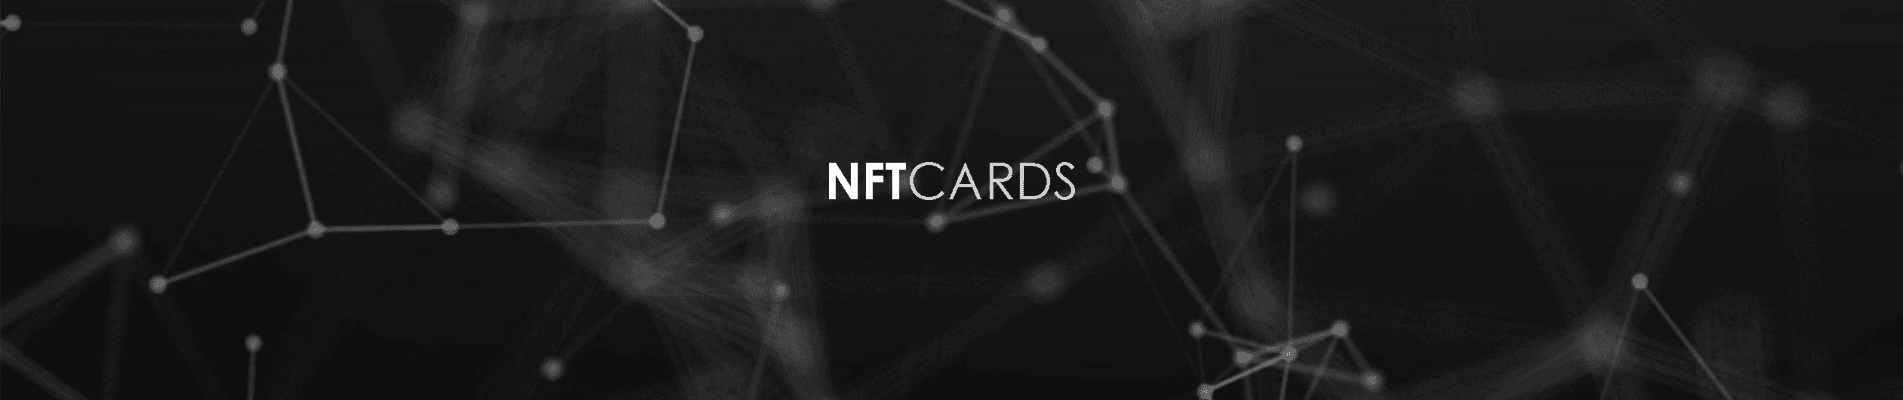 nft-cards 横幅